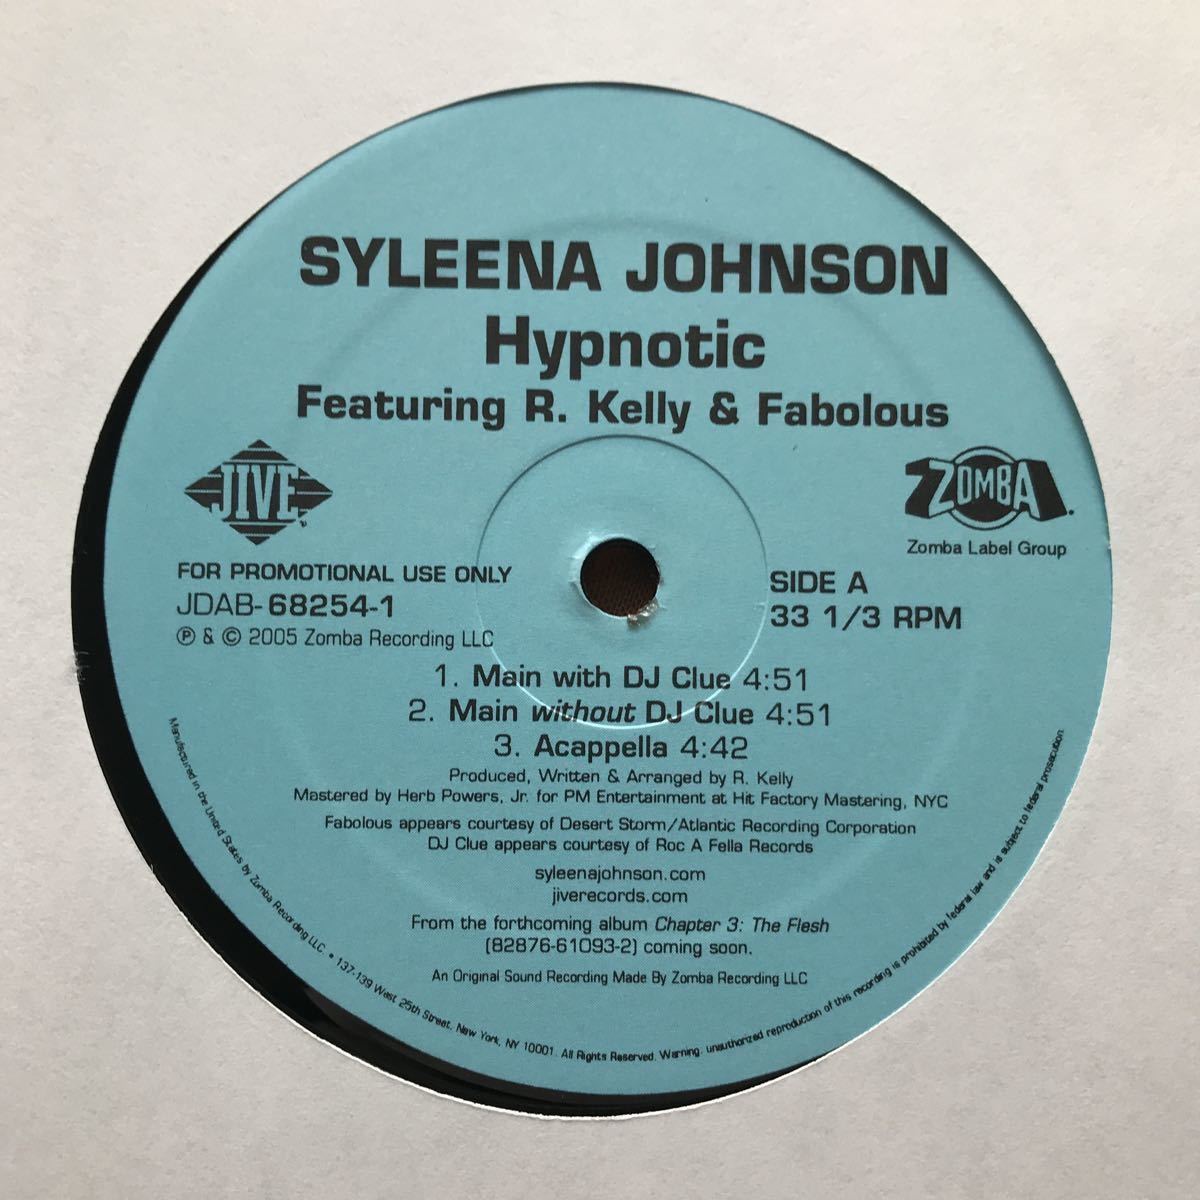 【r&b hip hop】Syleena Johnson Featuring R. Kelly & Fabolous / Hypnotic［12inch］オリジナル盤《9595》_画像3